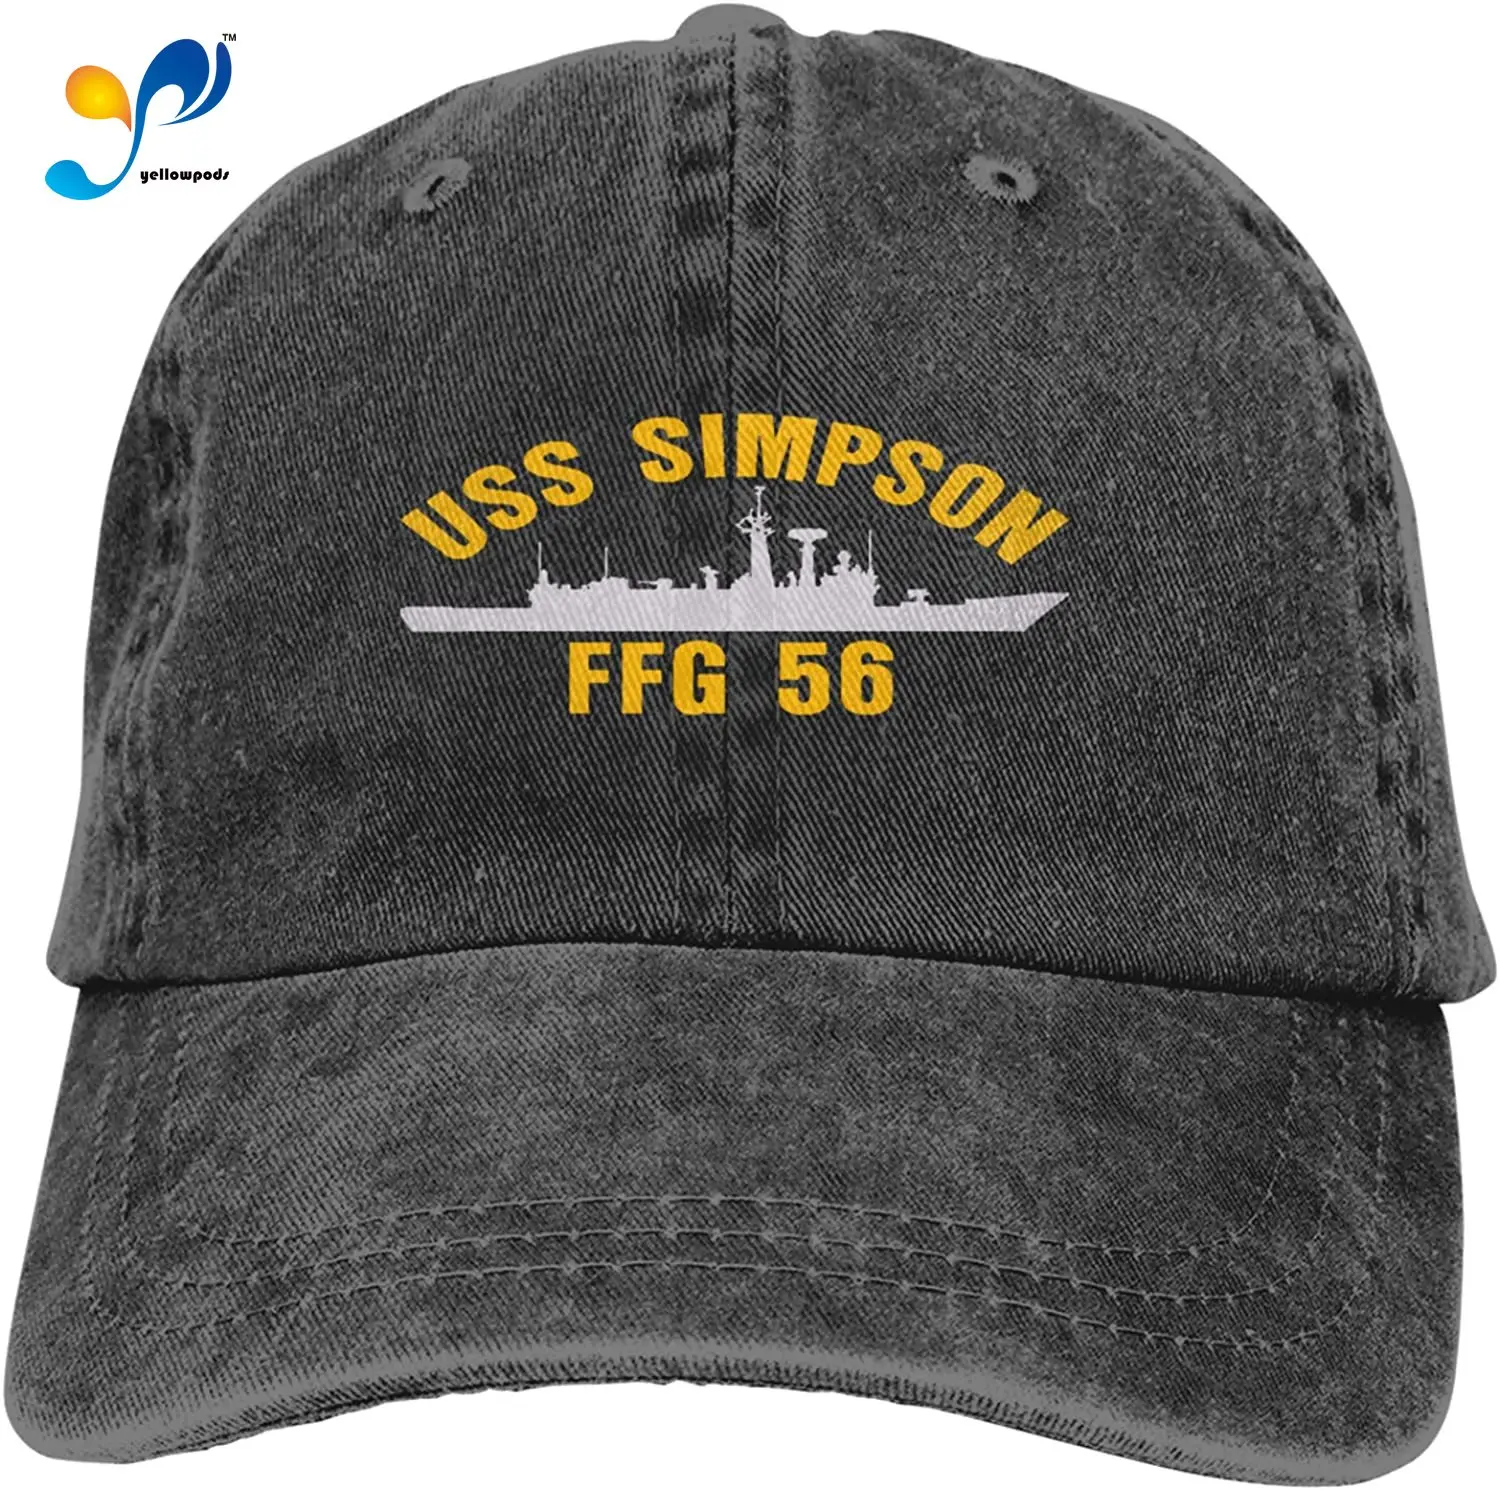 

USS Worden Dlg 18 Sandwich Cap Denim Hats Baseball Cap Adult Cowboy Hat